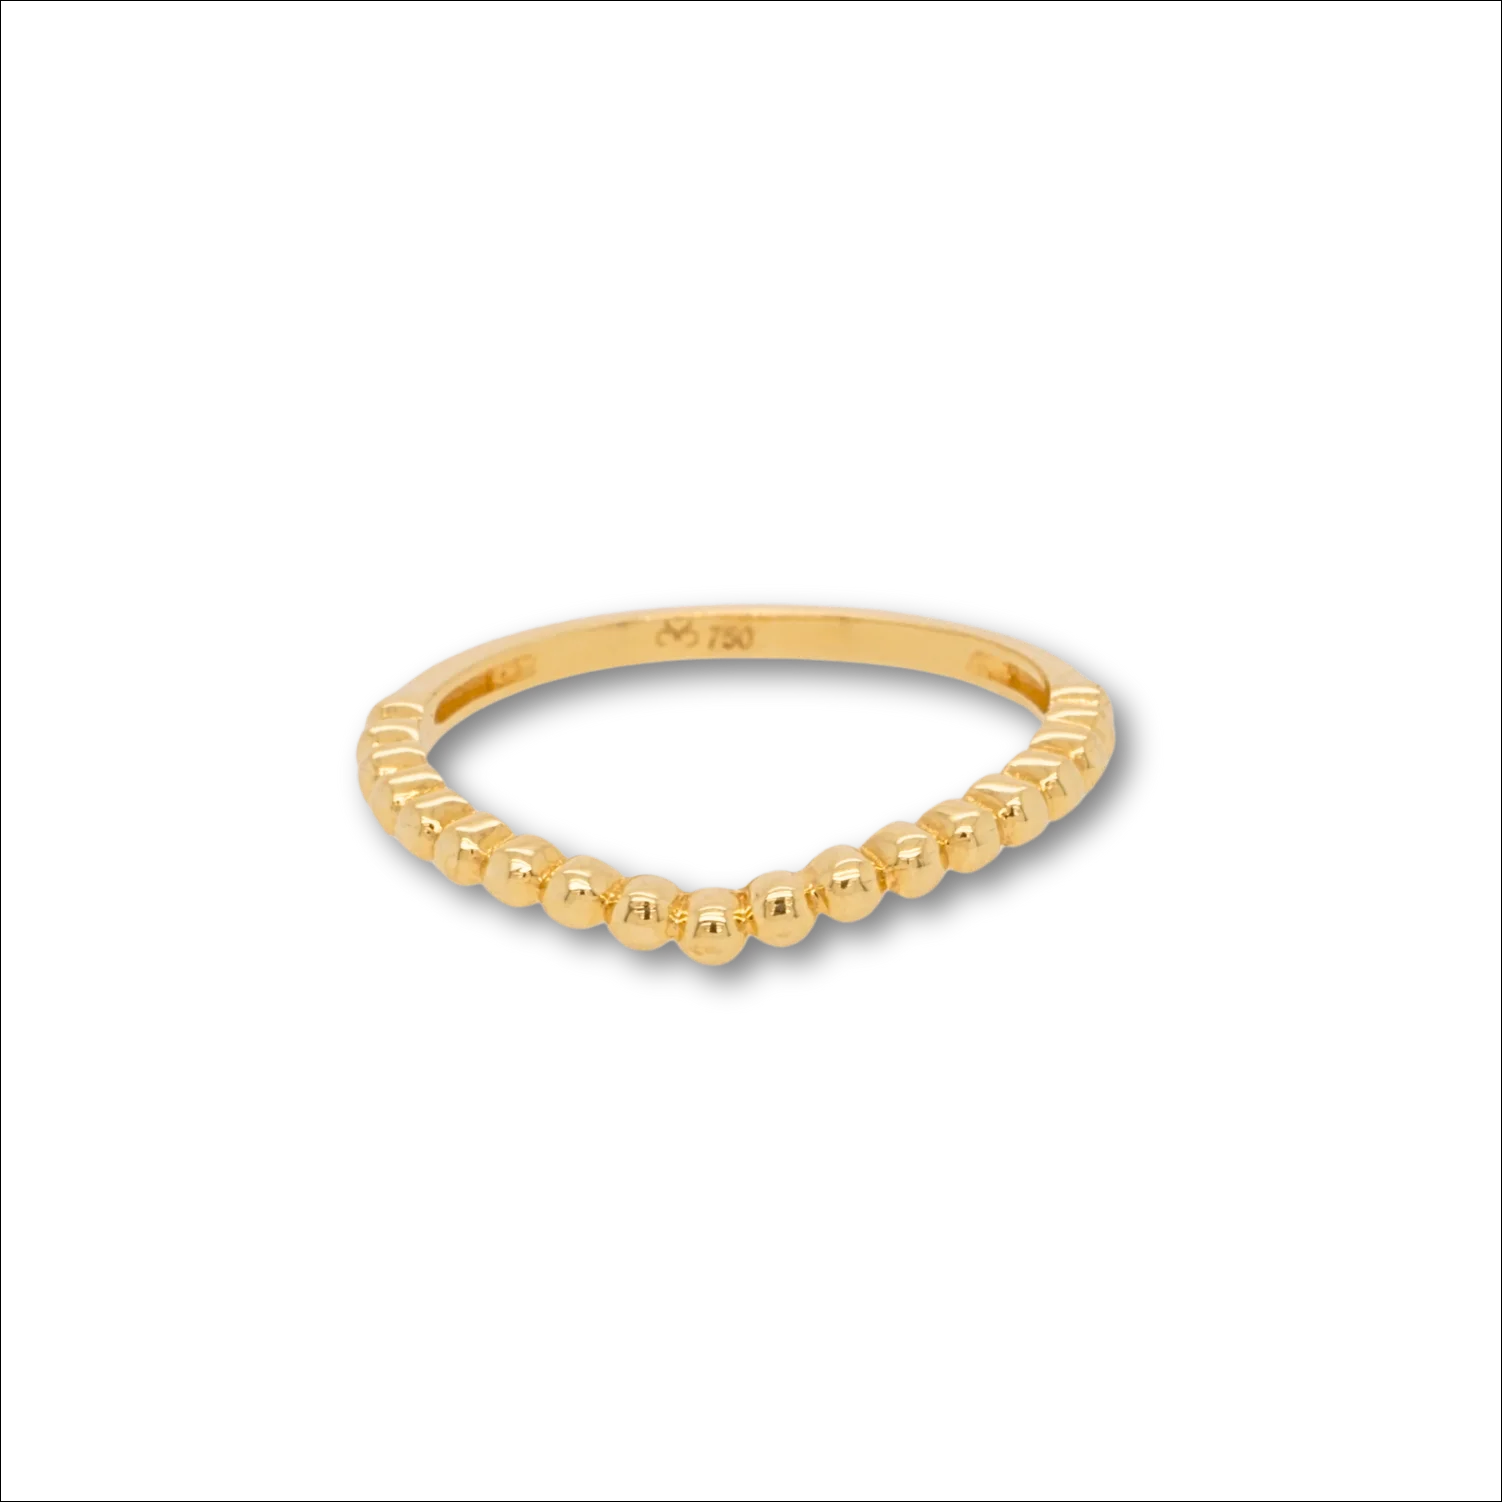 Quintessence of Elegance: The 18k Gold Elegant Ring | Rings